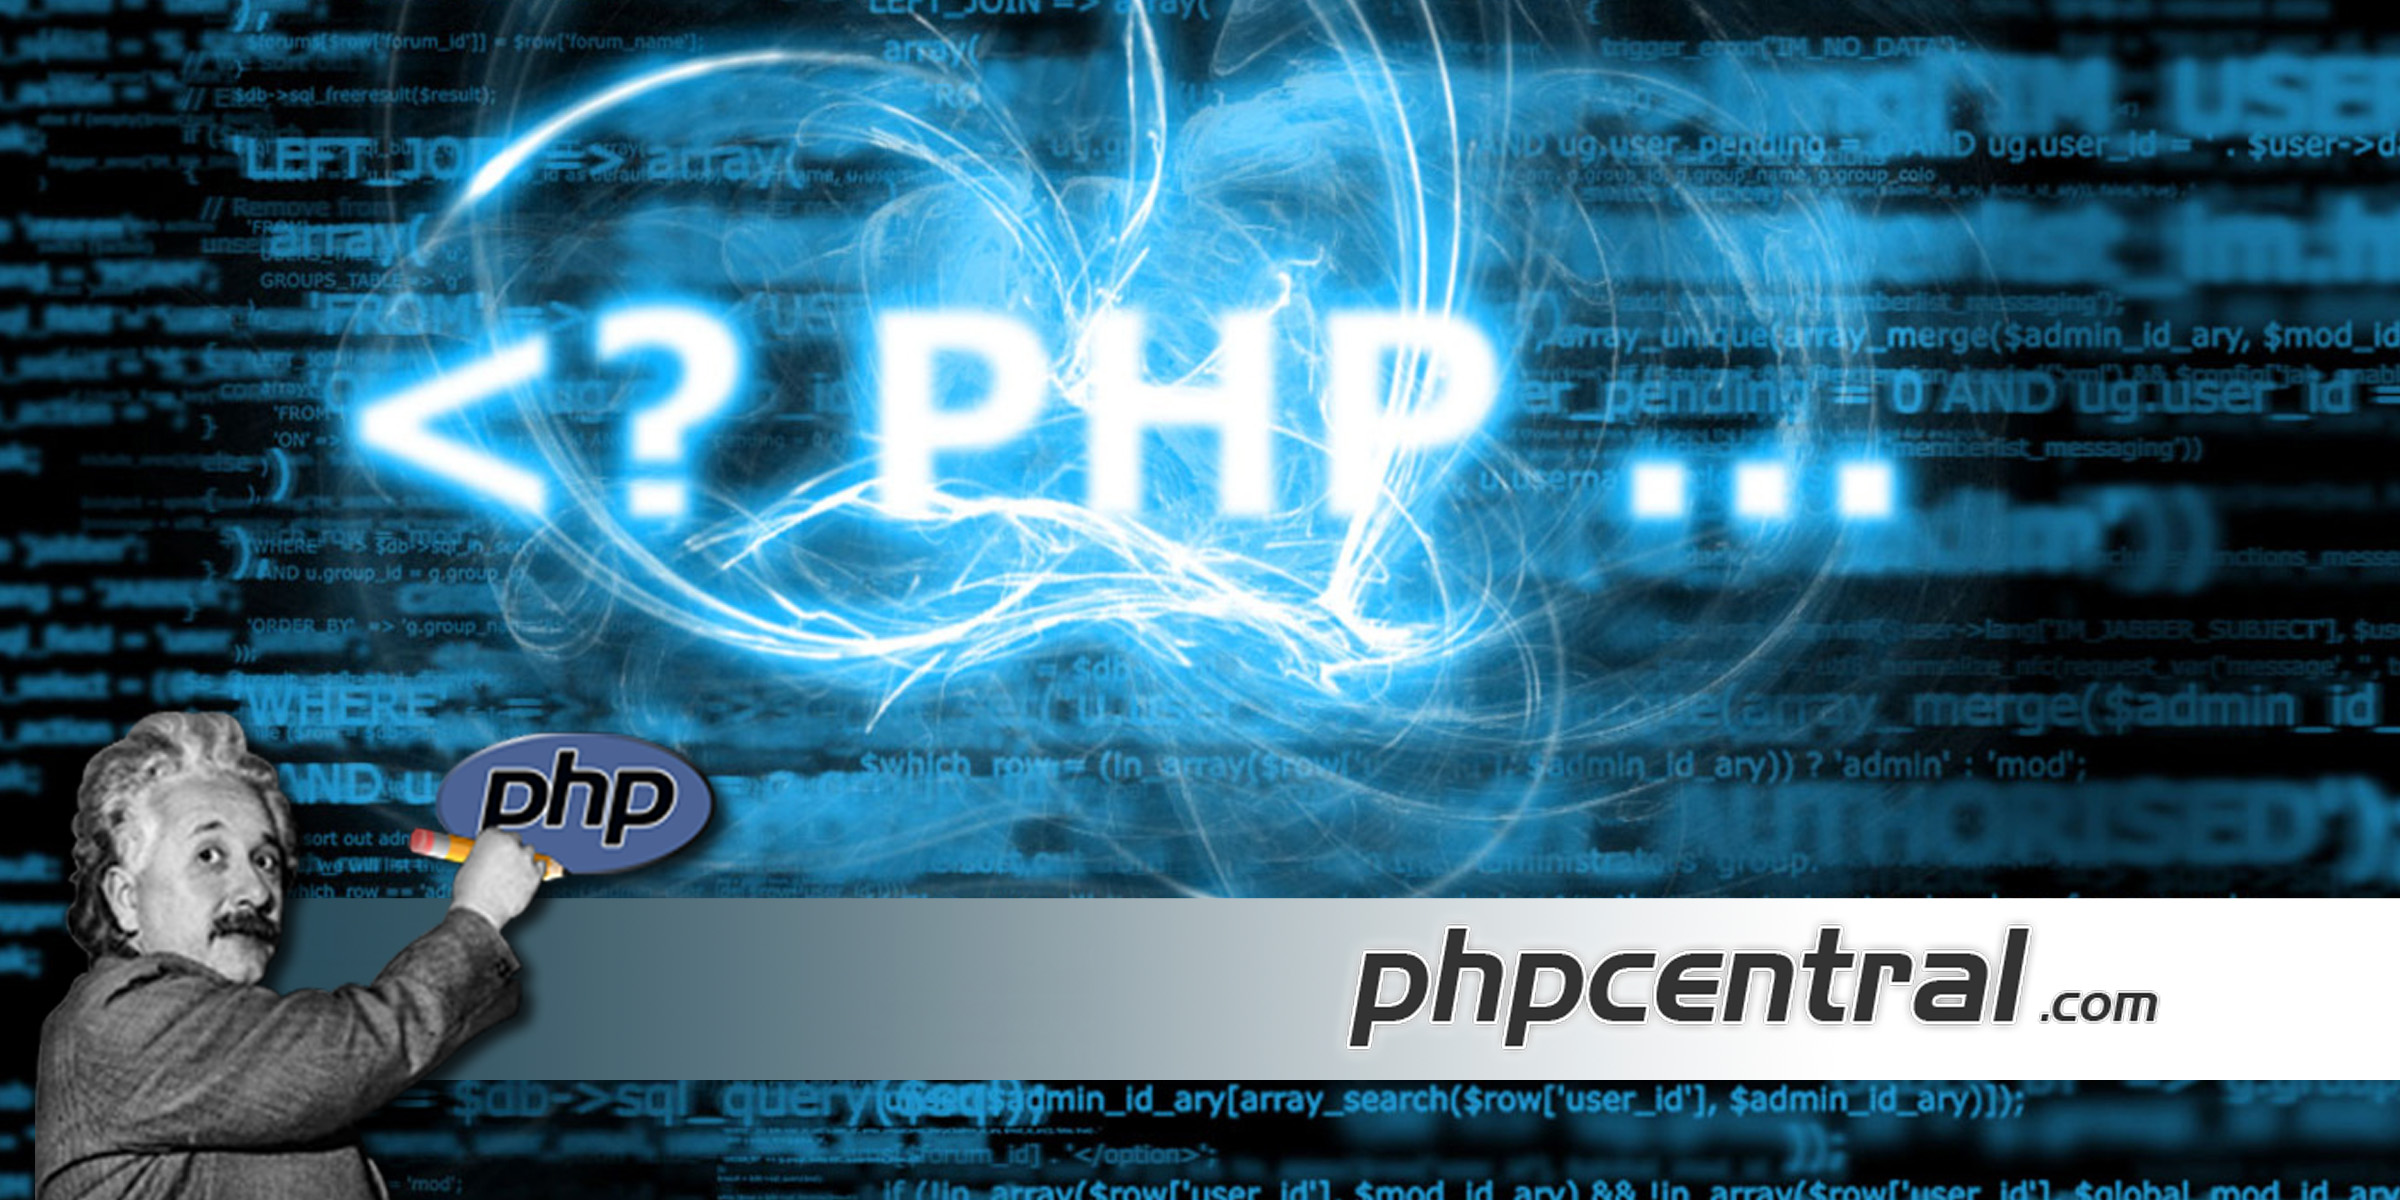 (c) Phpcentral.com